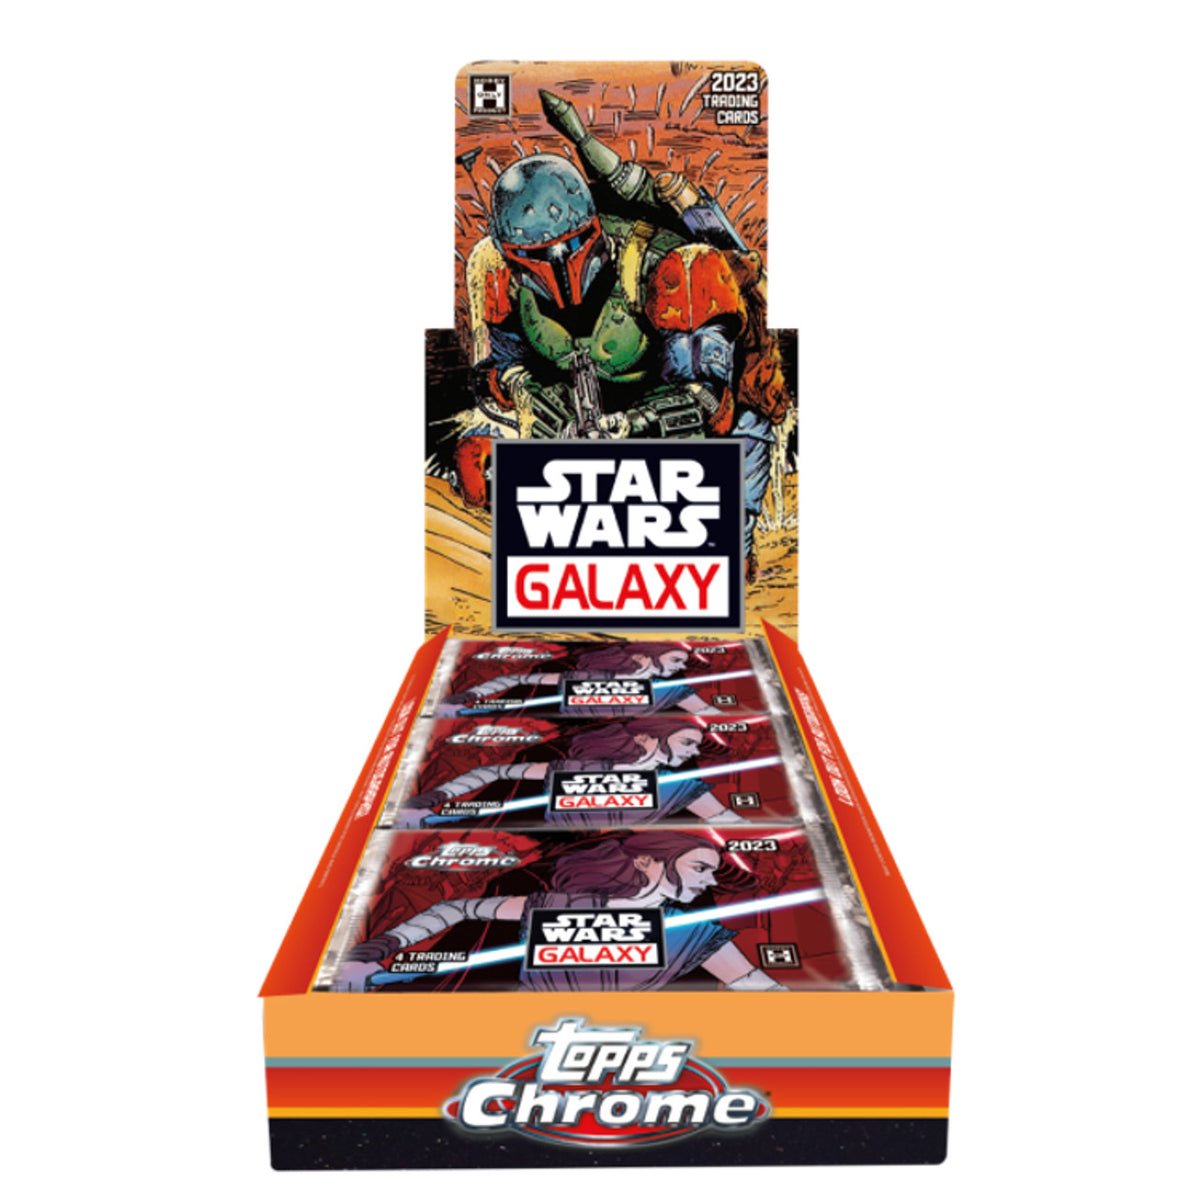 2023 Topps Chrome Star Wars Galaxy Hobby Box 887521120536 - King Card Canada